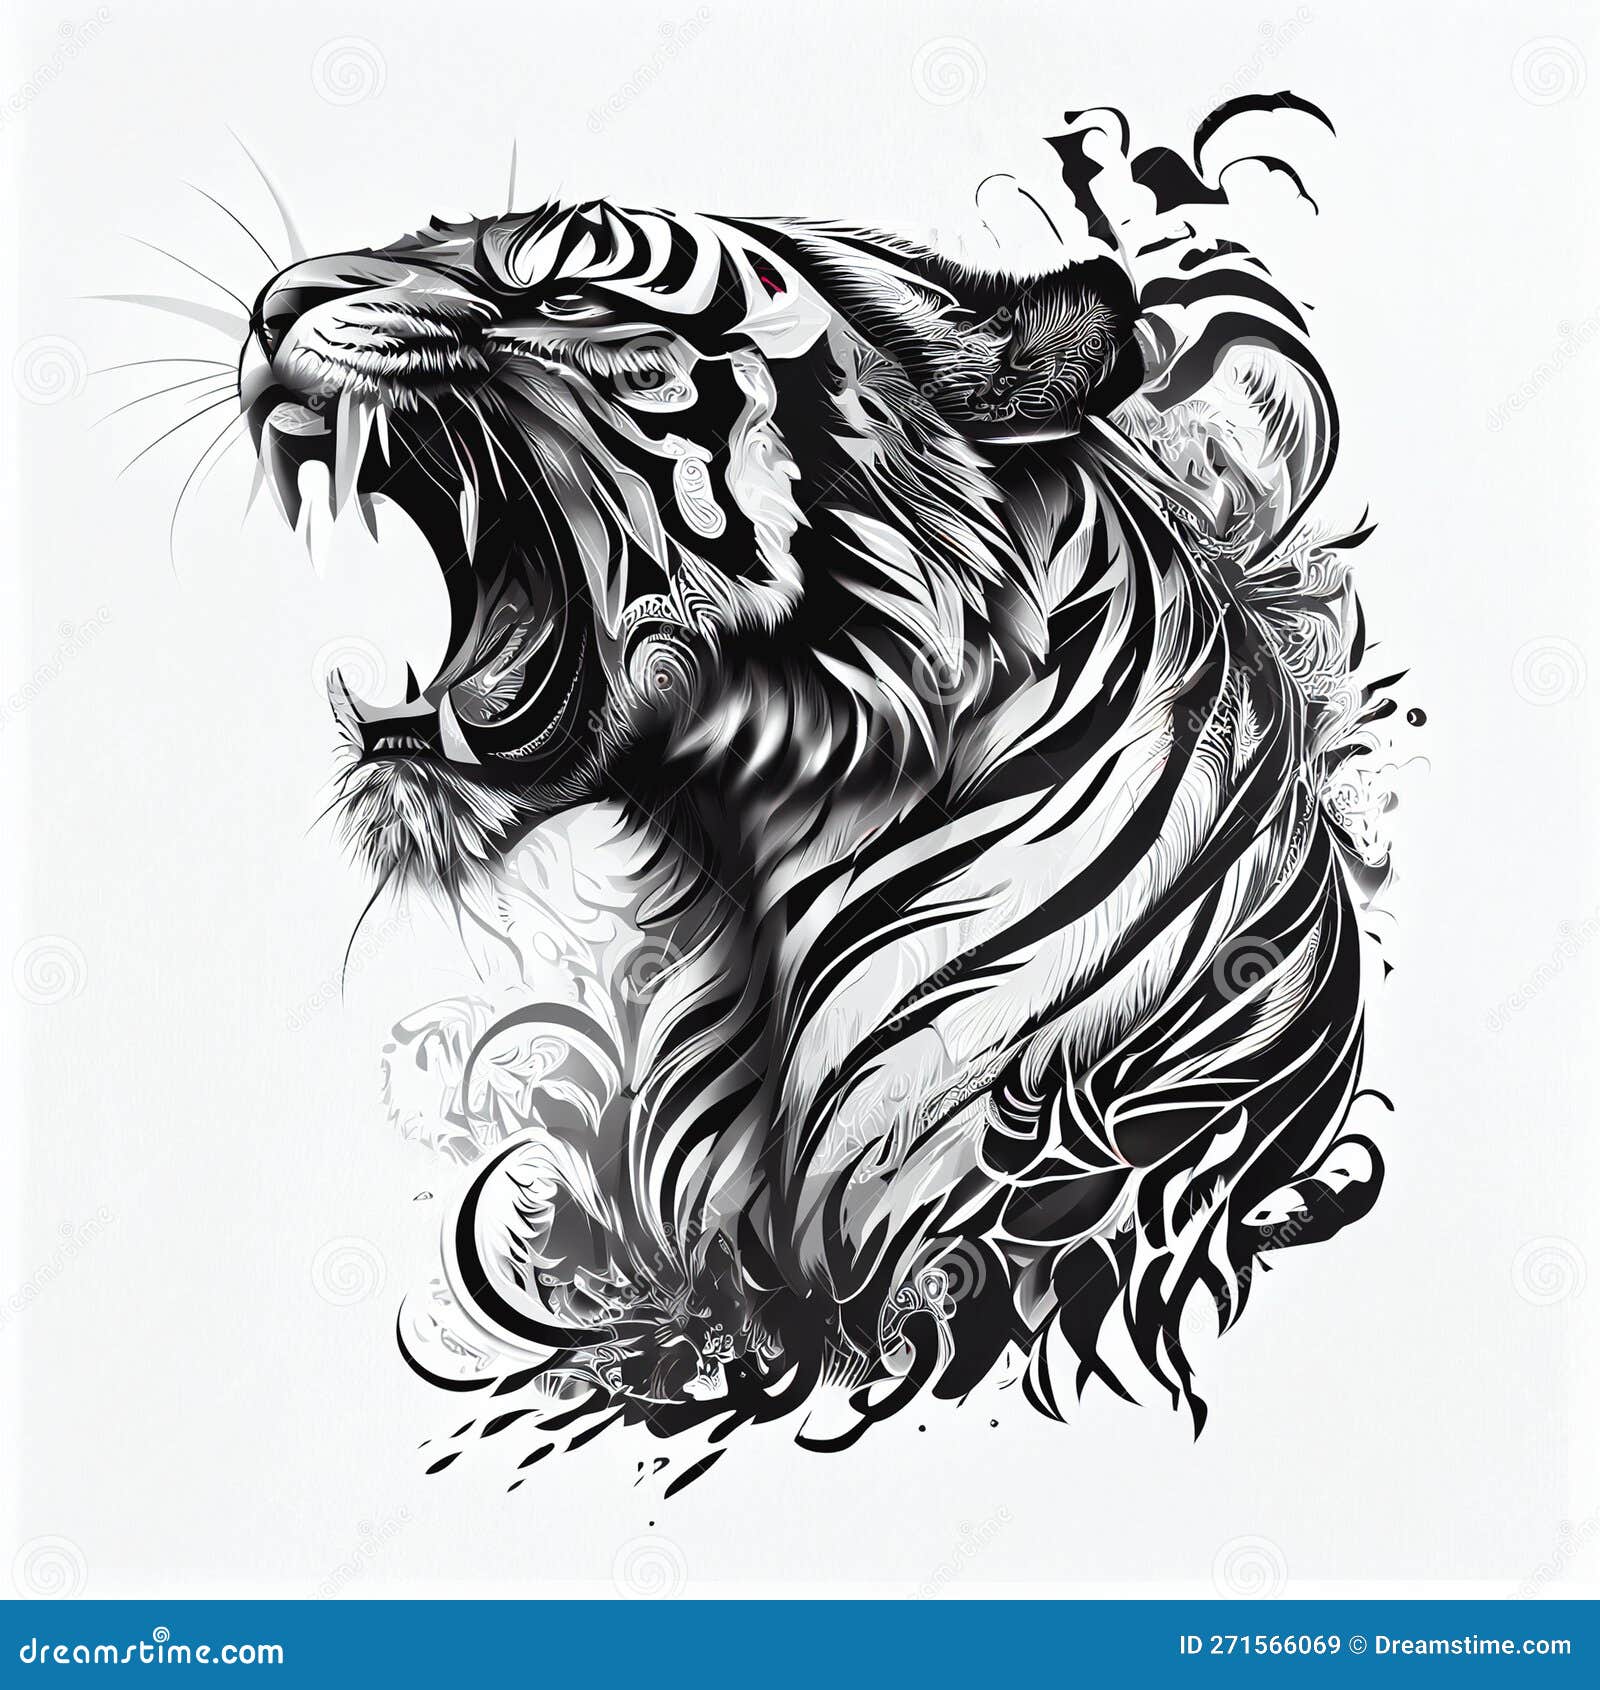 Skull Tattoo Design Wall Mural | Buy online at Abposters.com